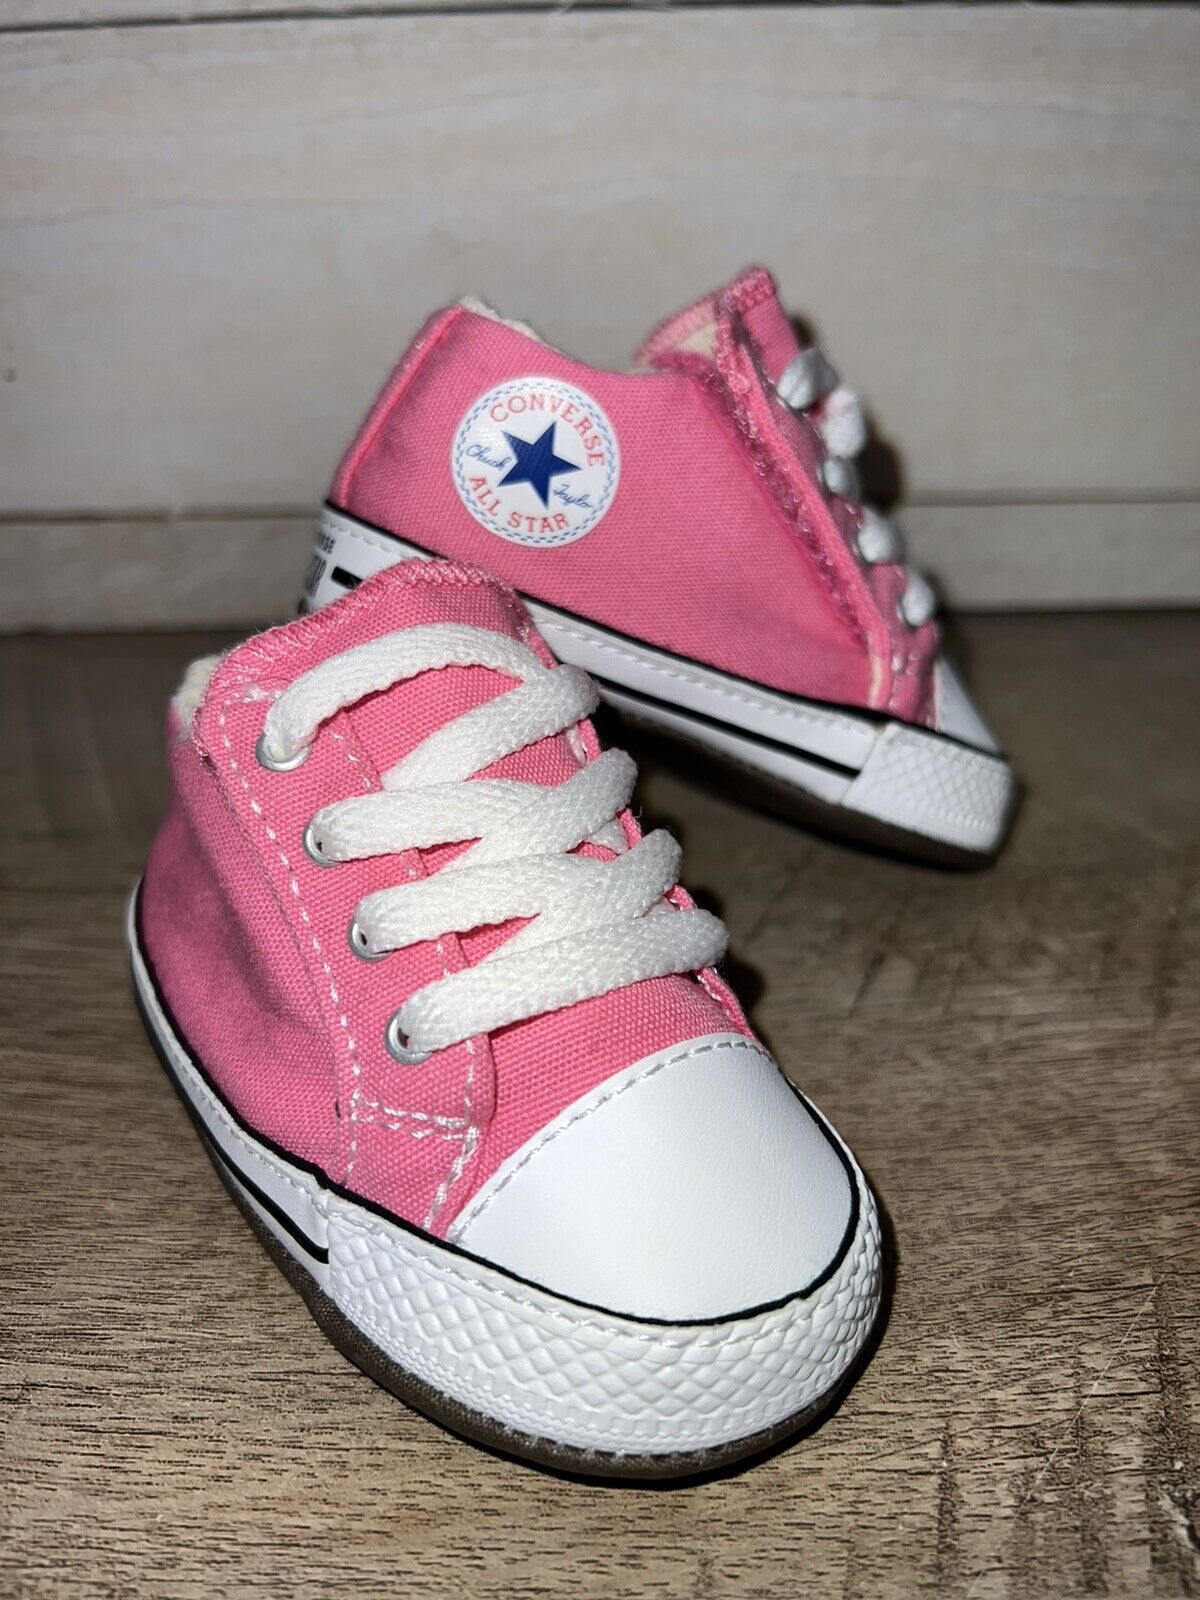 Isaac eksil Atlantic Converse Allstar Chuck Taylor Baby Crib Shoes Size 1 Pink &amp; White Infant  Girl | eBay